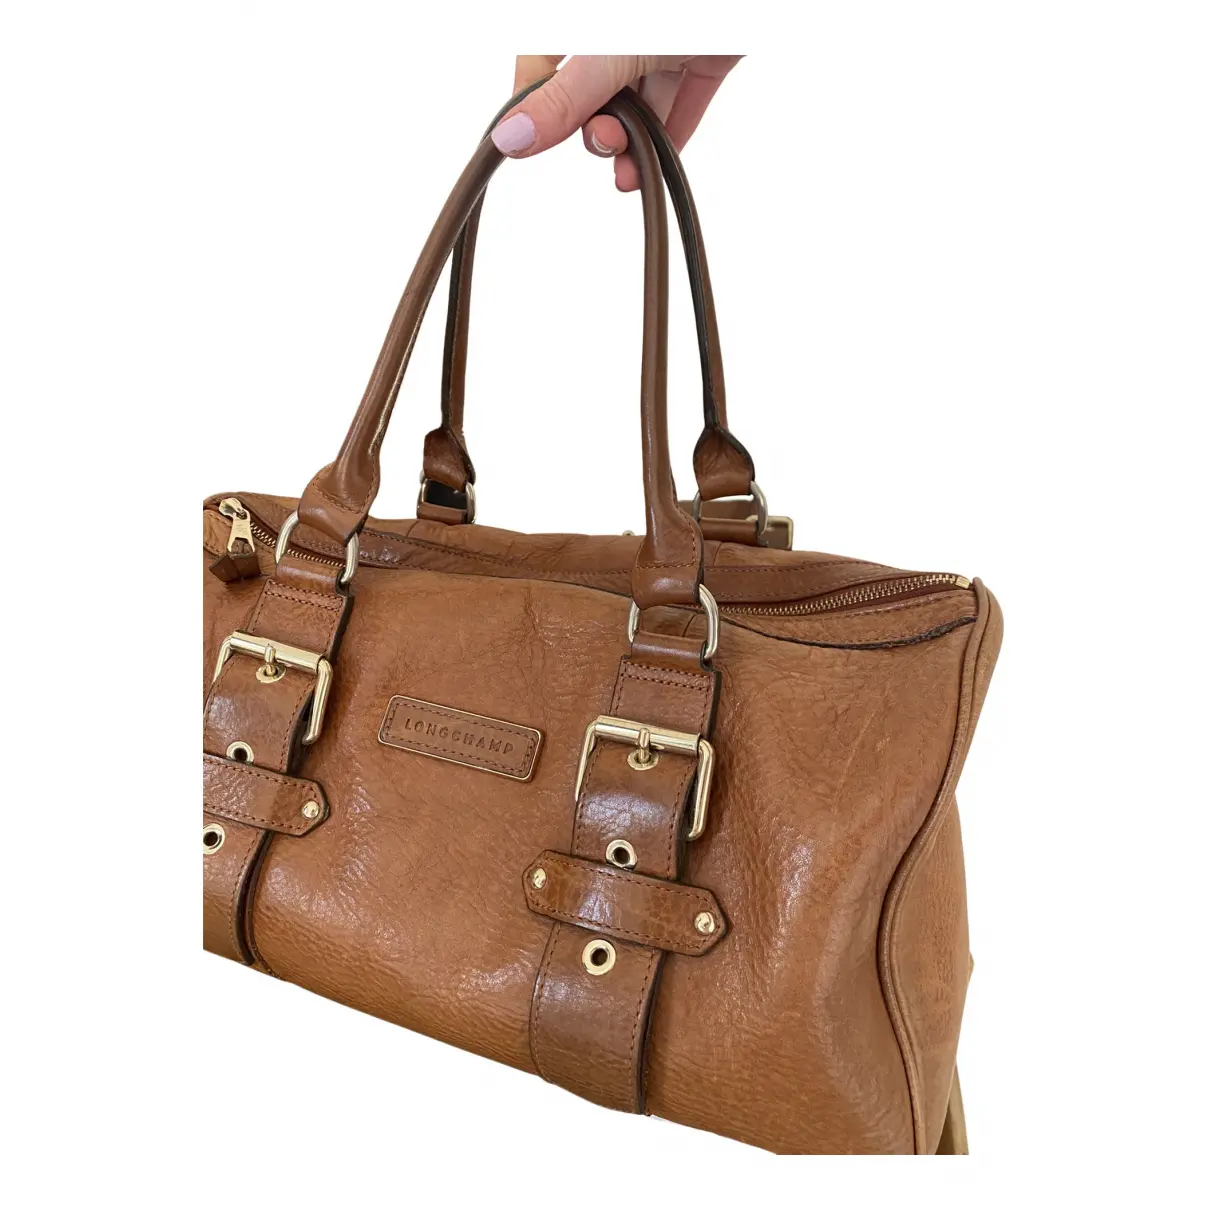 Buy Longchamp Kate Moss leather handbag online